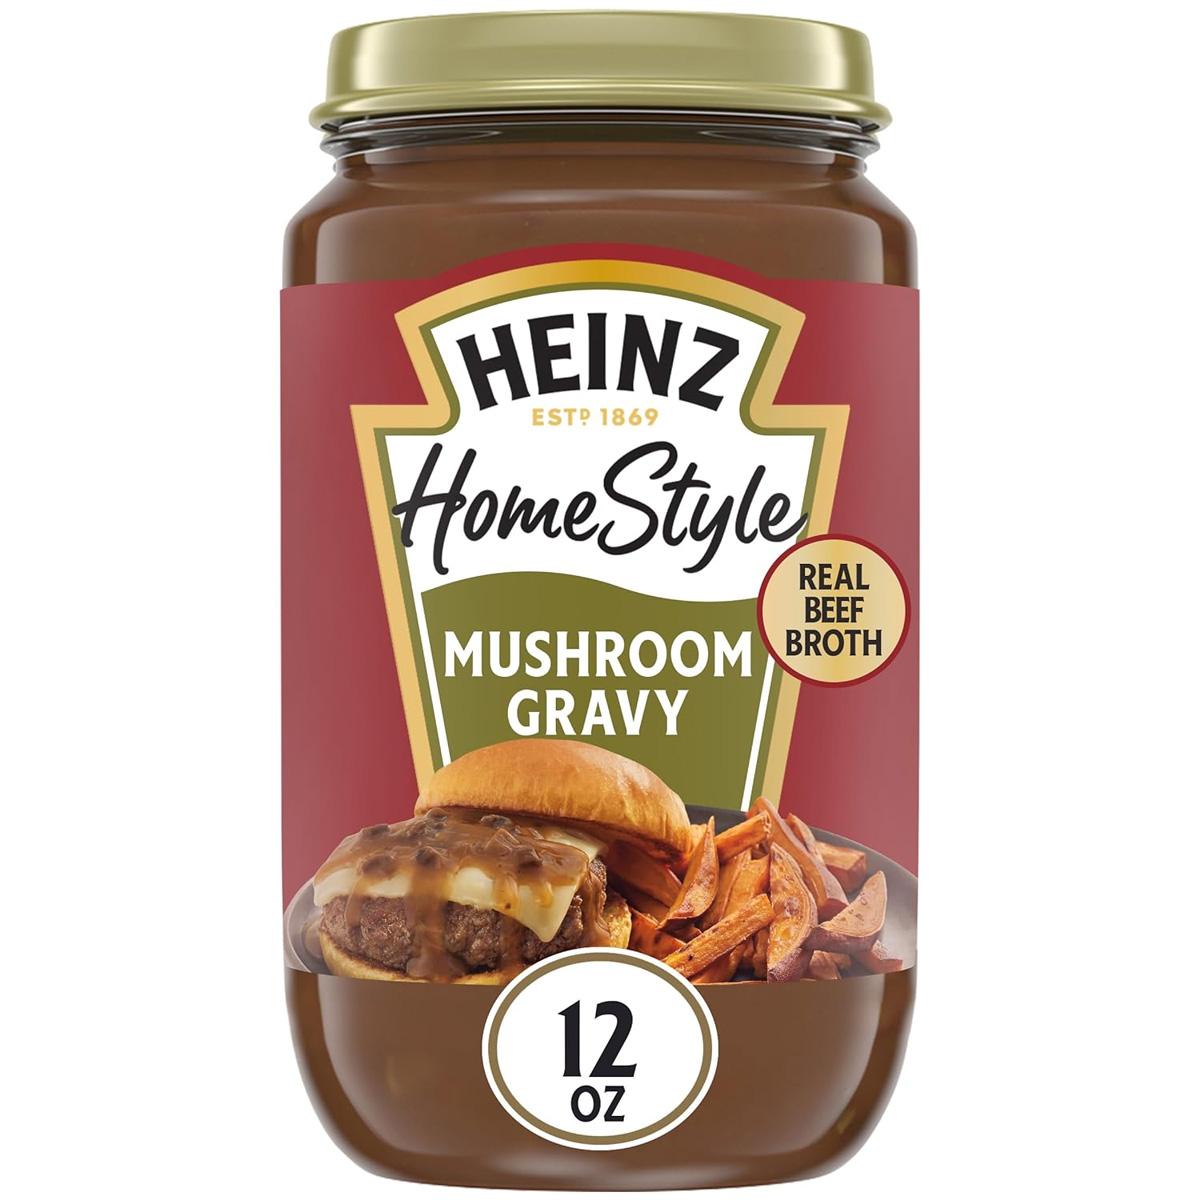 Heinz Homestyle Mushroom Gravy for $1.43